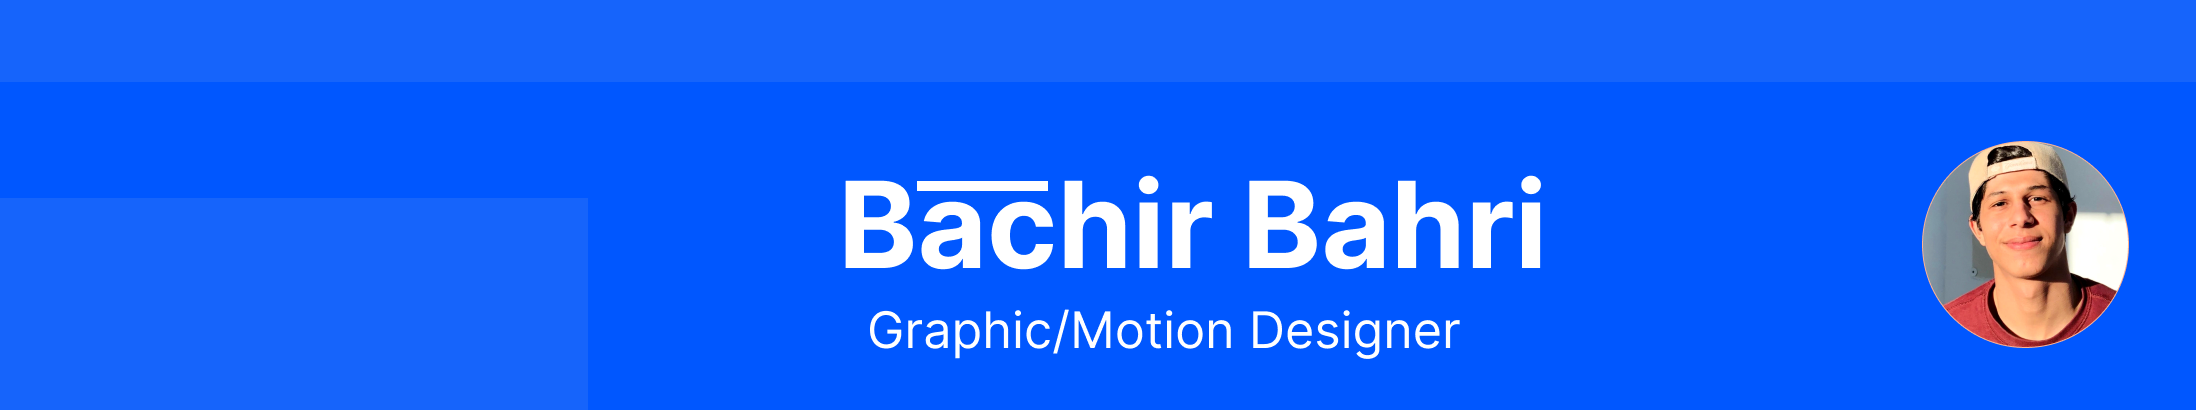 Bachir Bahri's profile banner